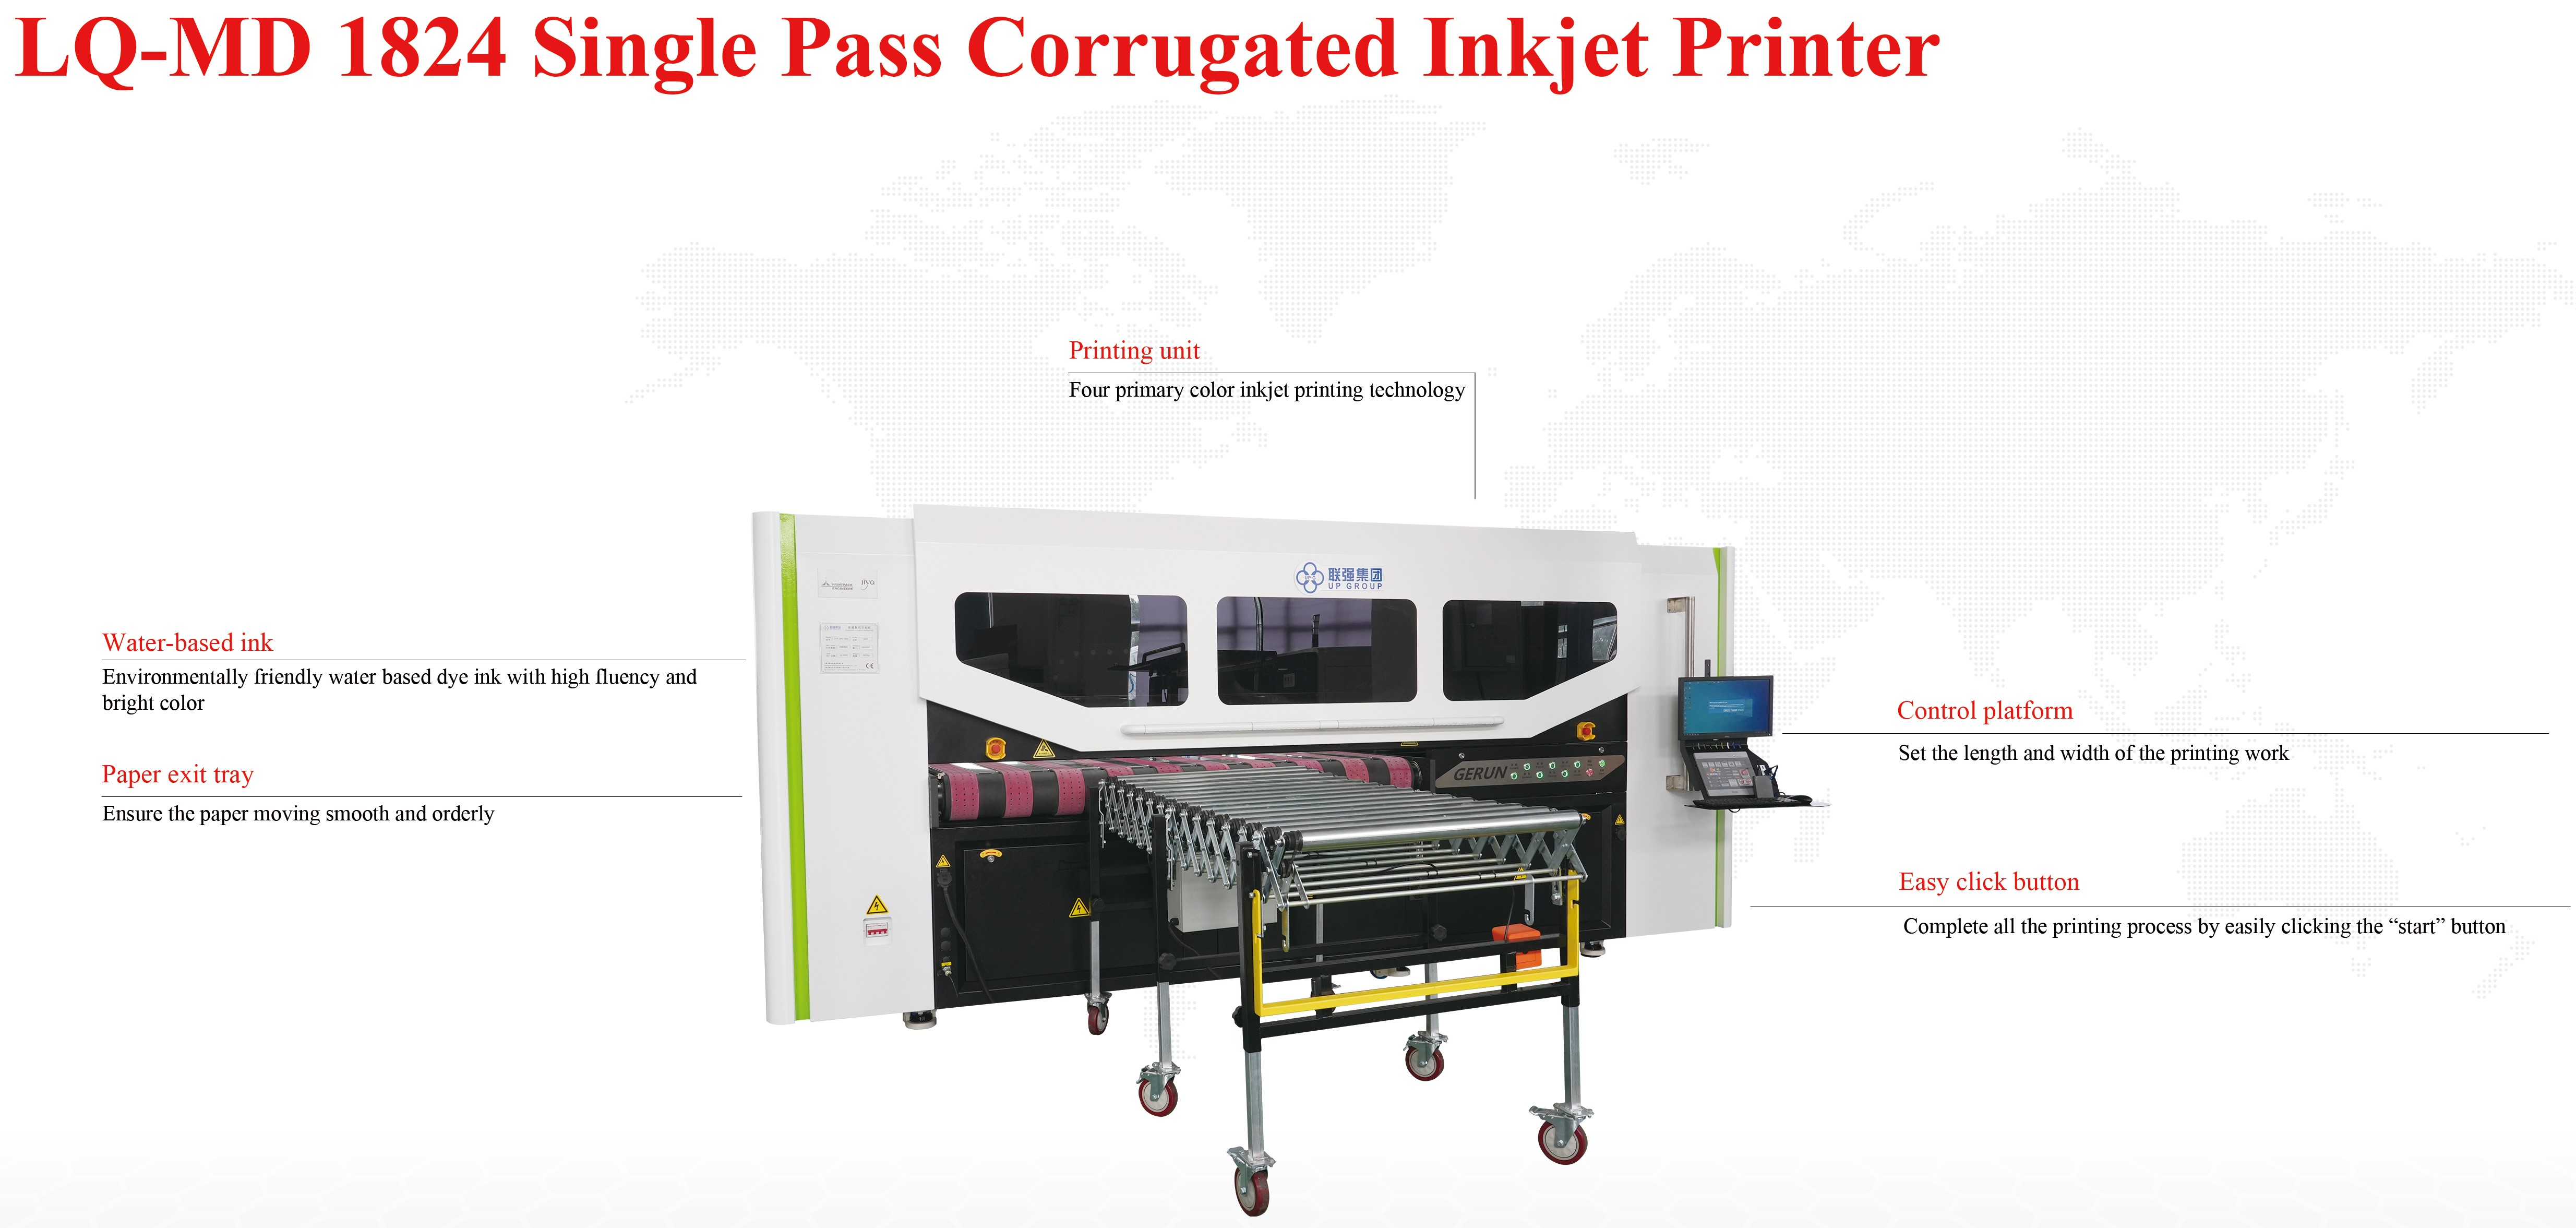 LO-MD 1824 Single Pass Corrugated Inkjet Printer